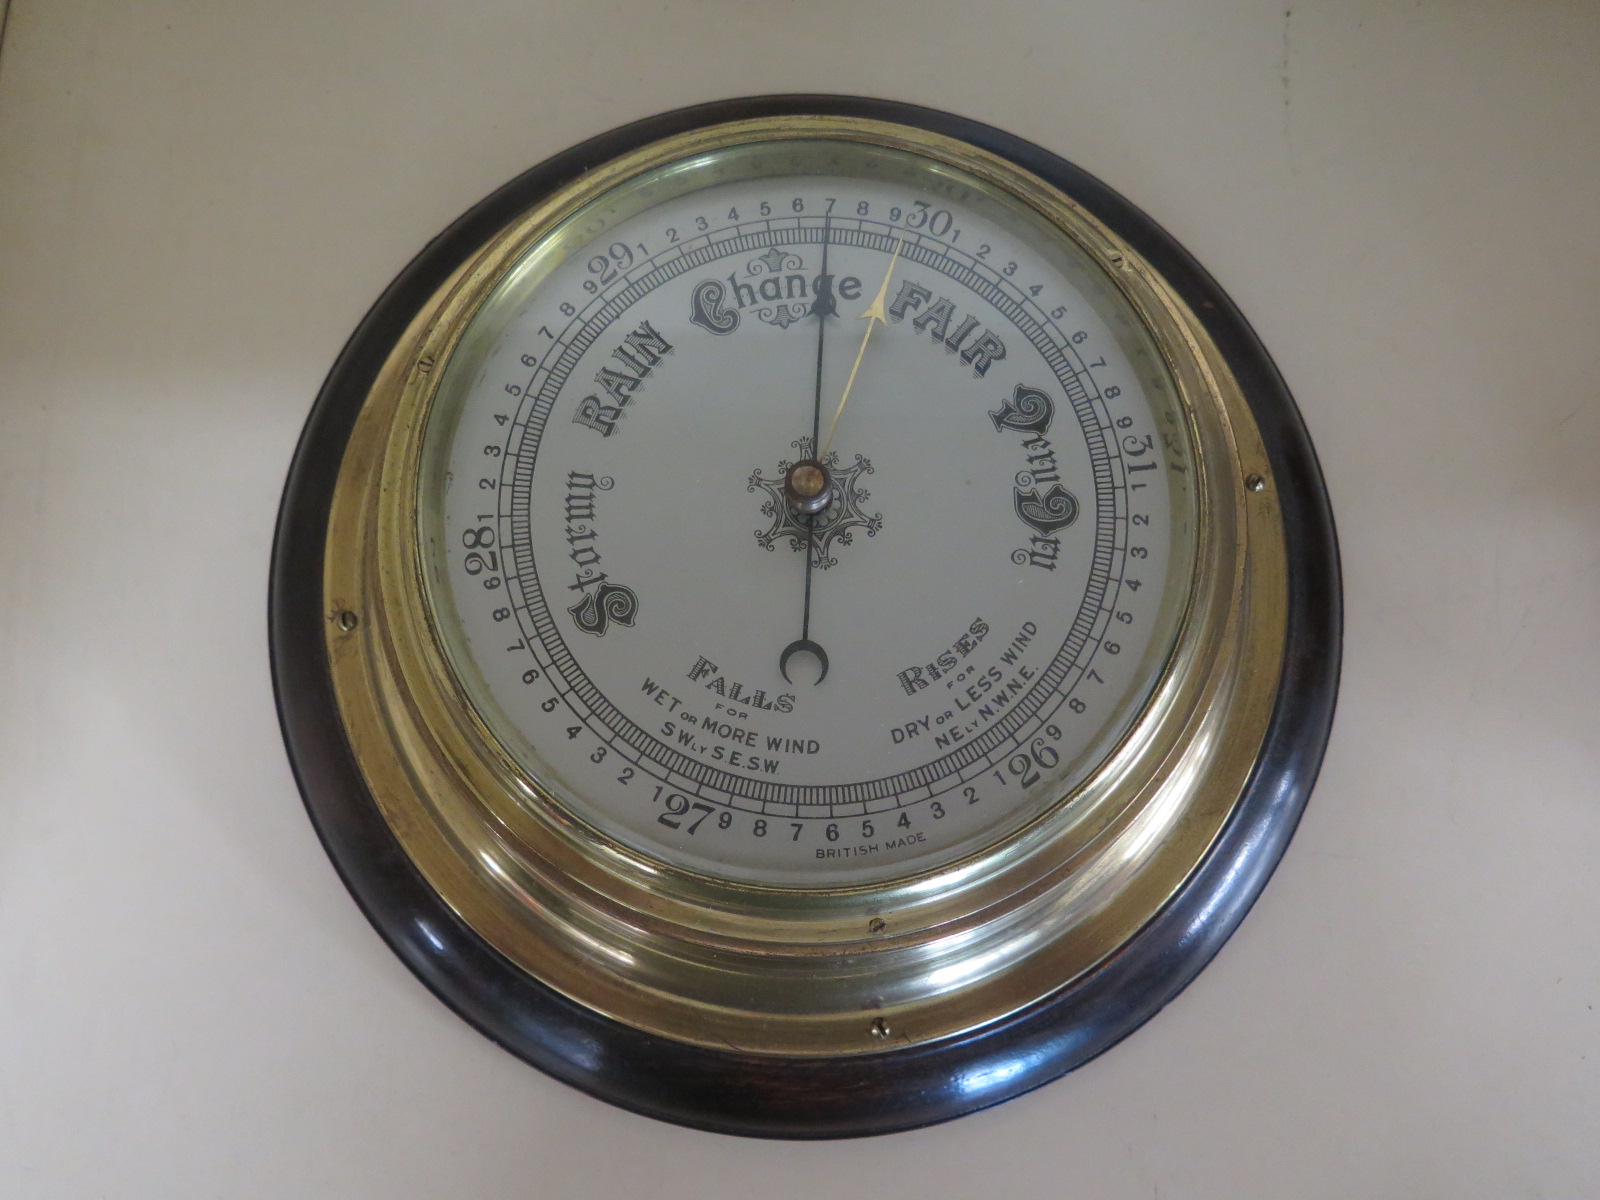 A mahogany and brass bulkhead aneroid barometer - 27cm diameter